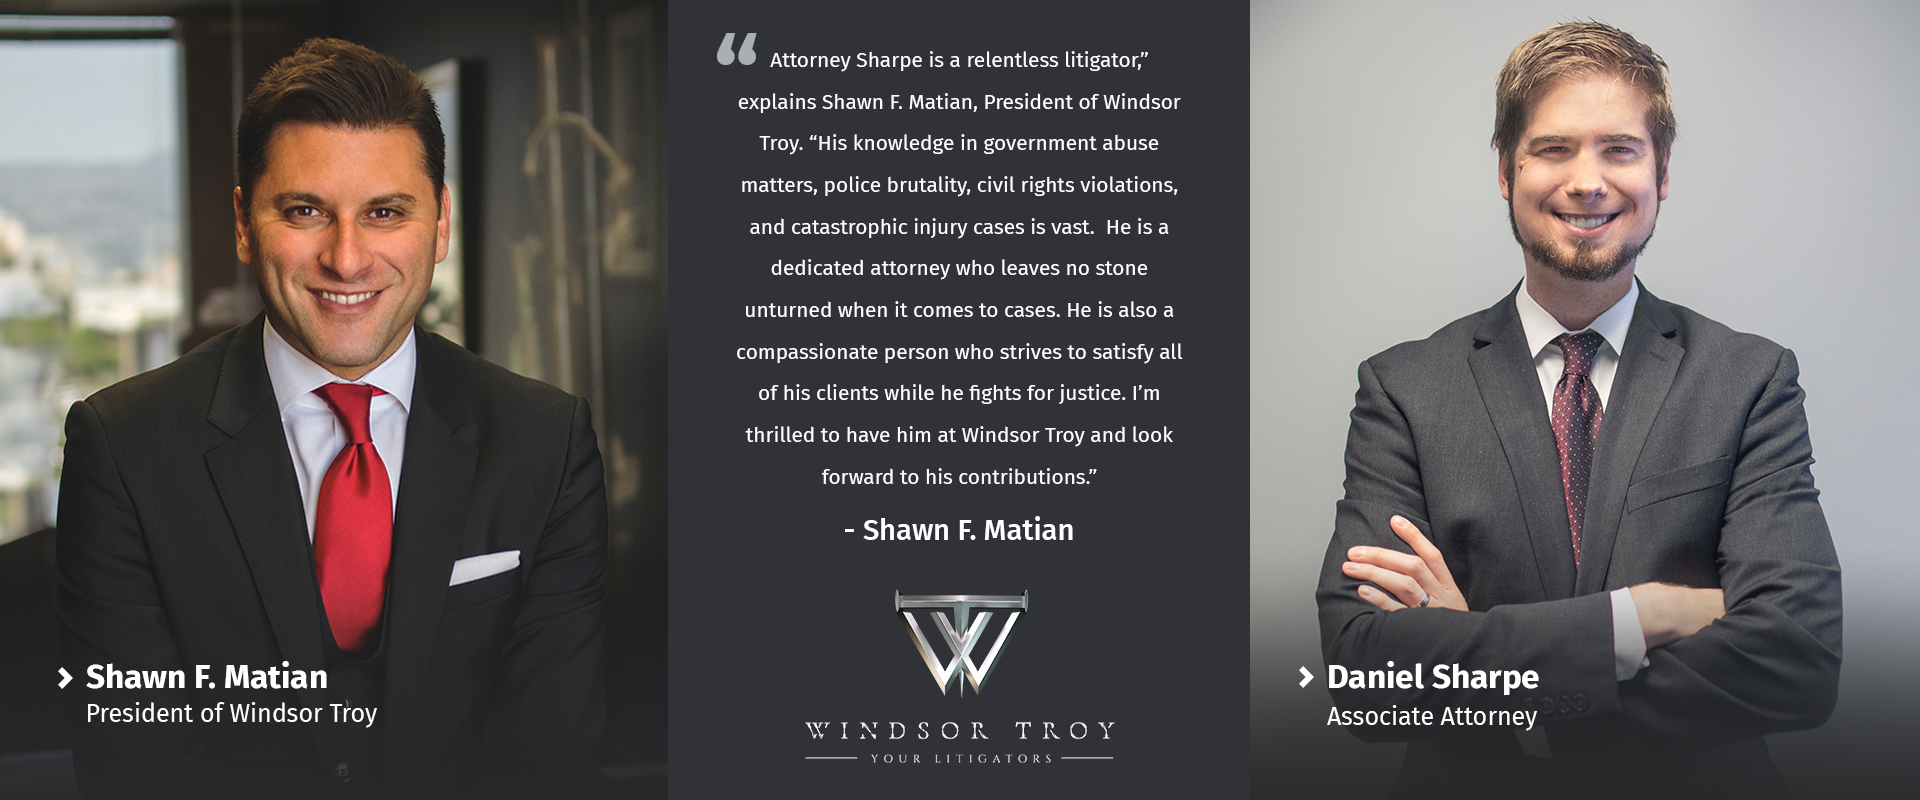 Shawn F. Matian, President of Windsor Troy, with Associate Attorney Daniel Sharpe